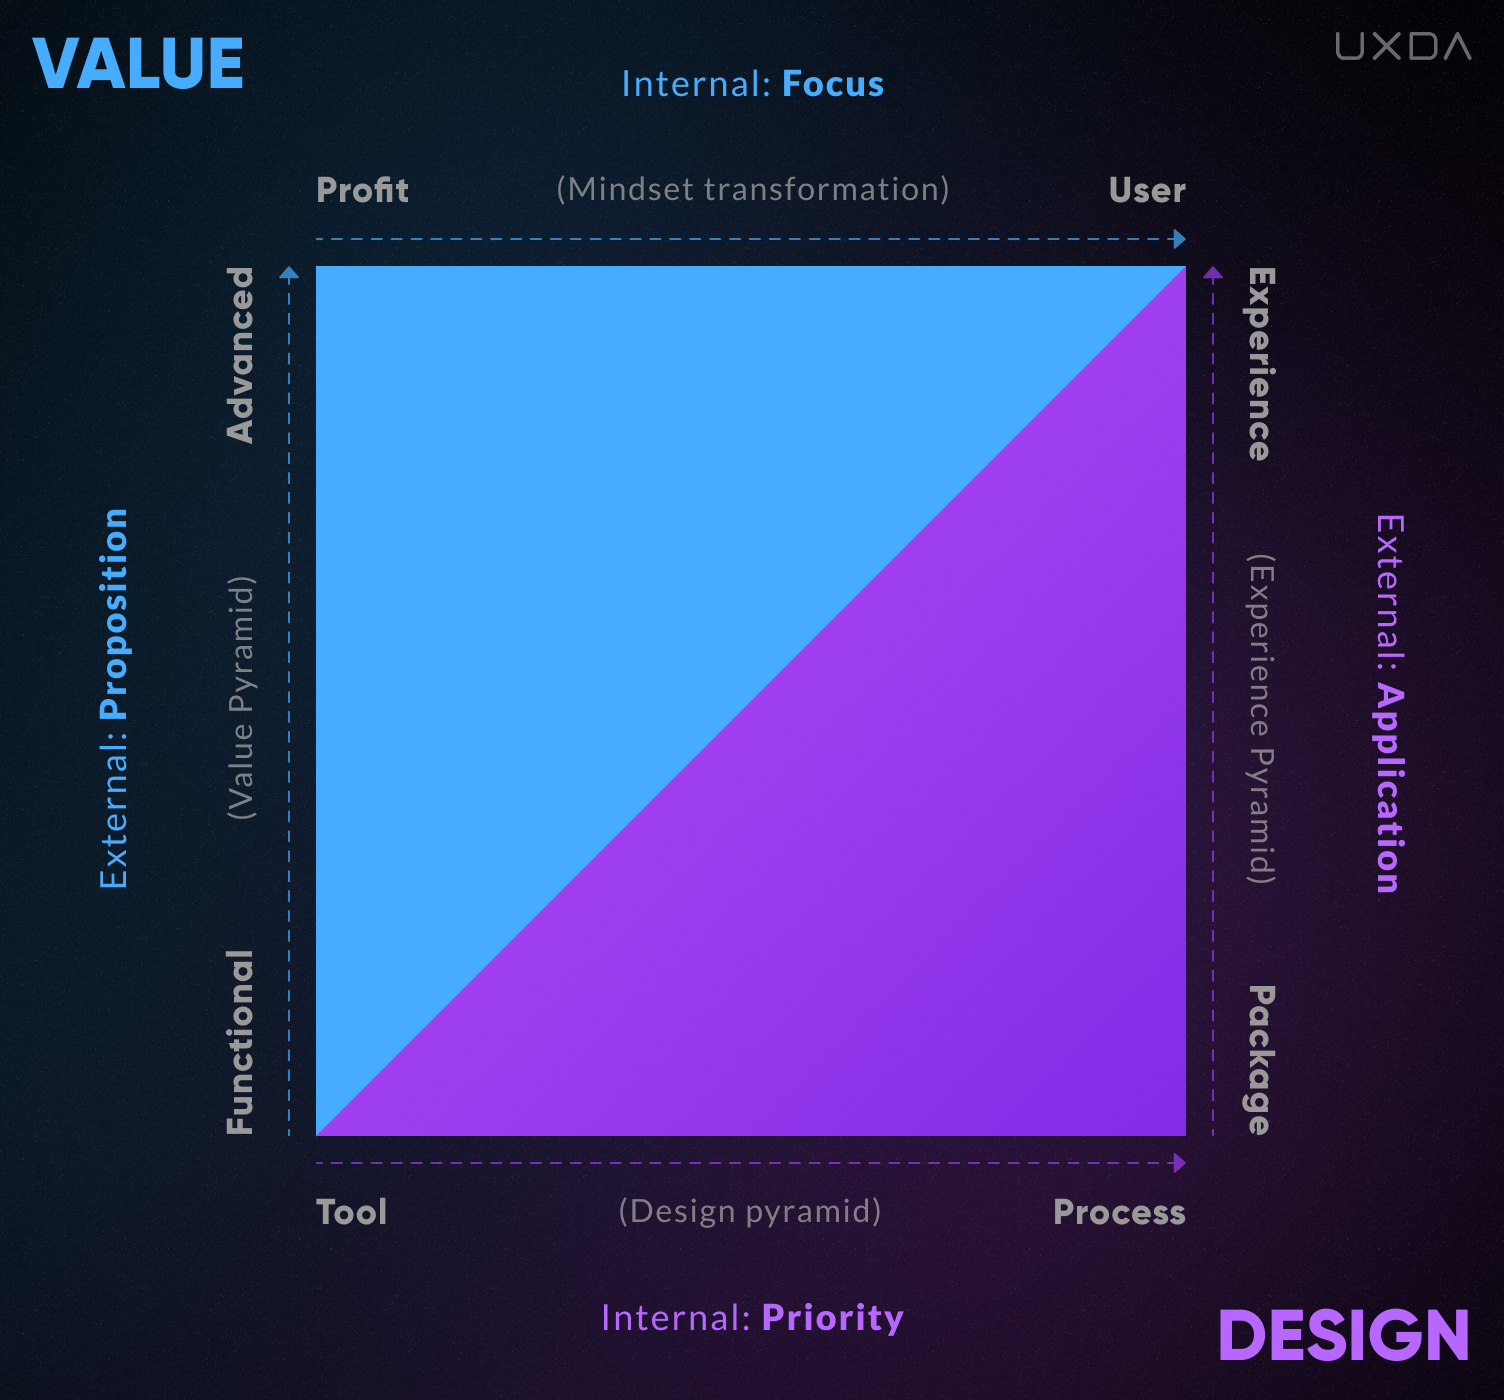 The UX Design Matrix Purpose-Driven Banking Culture Value Design disruption mindset transformation